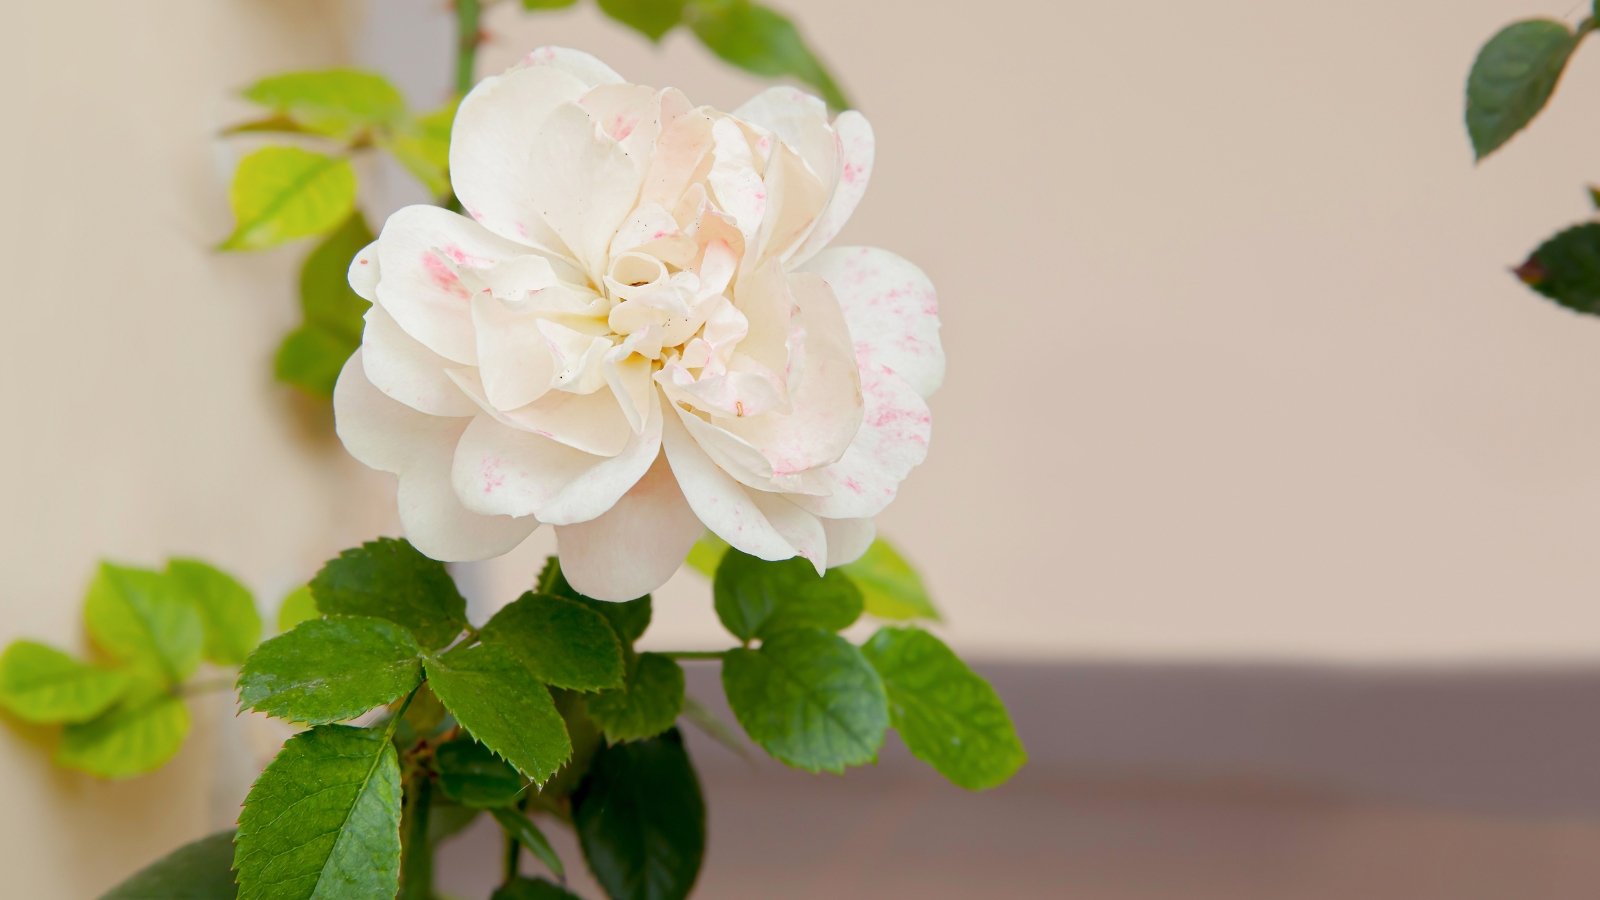 Rosa alba ‘Maxima’ boasts sturdy stems, grey-green foliage, and large, double white flowers.